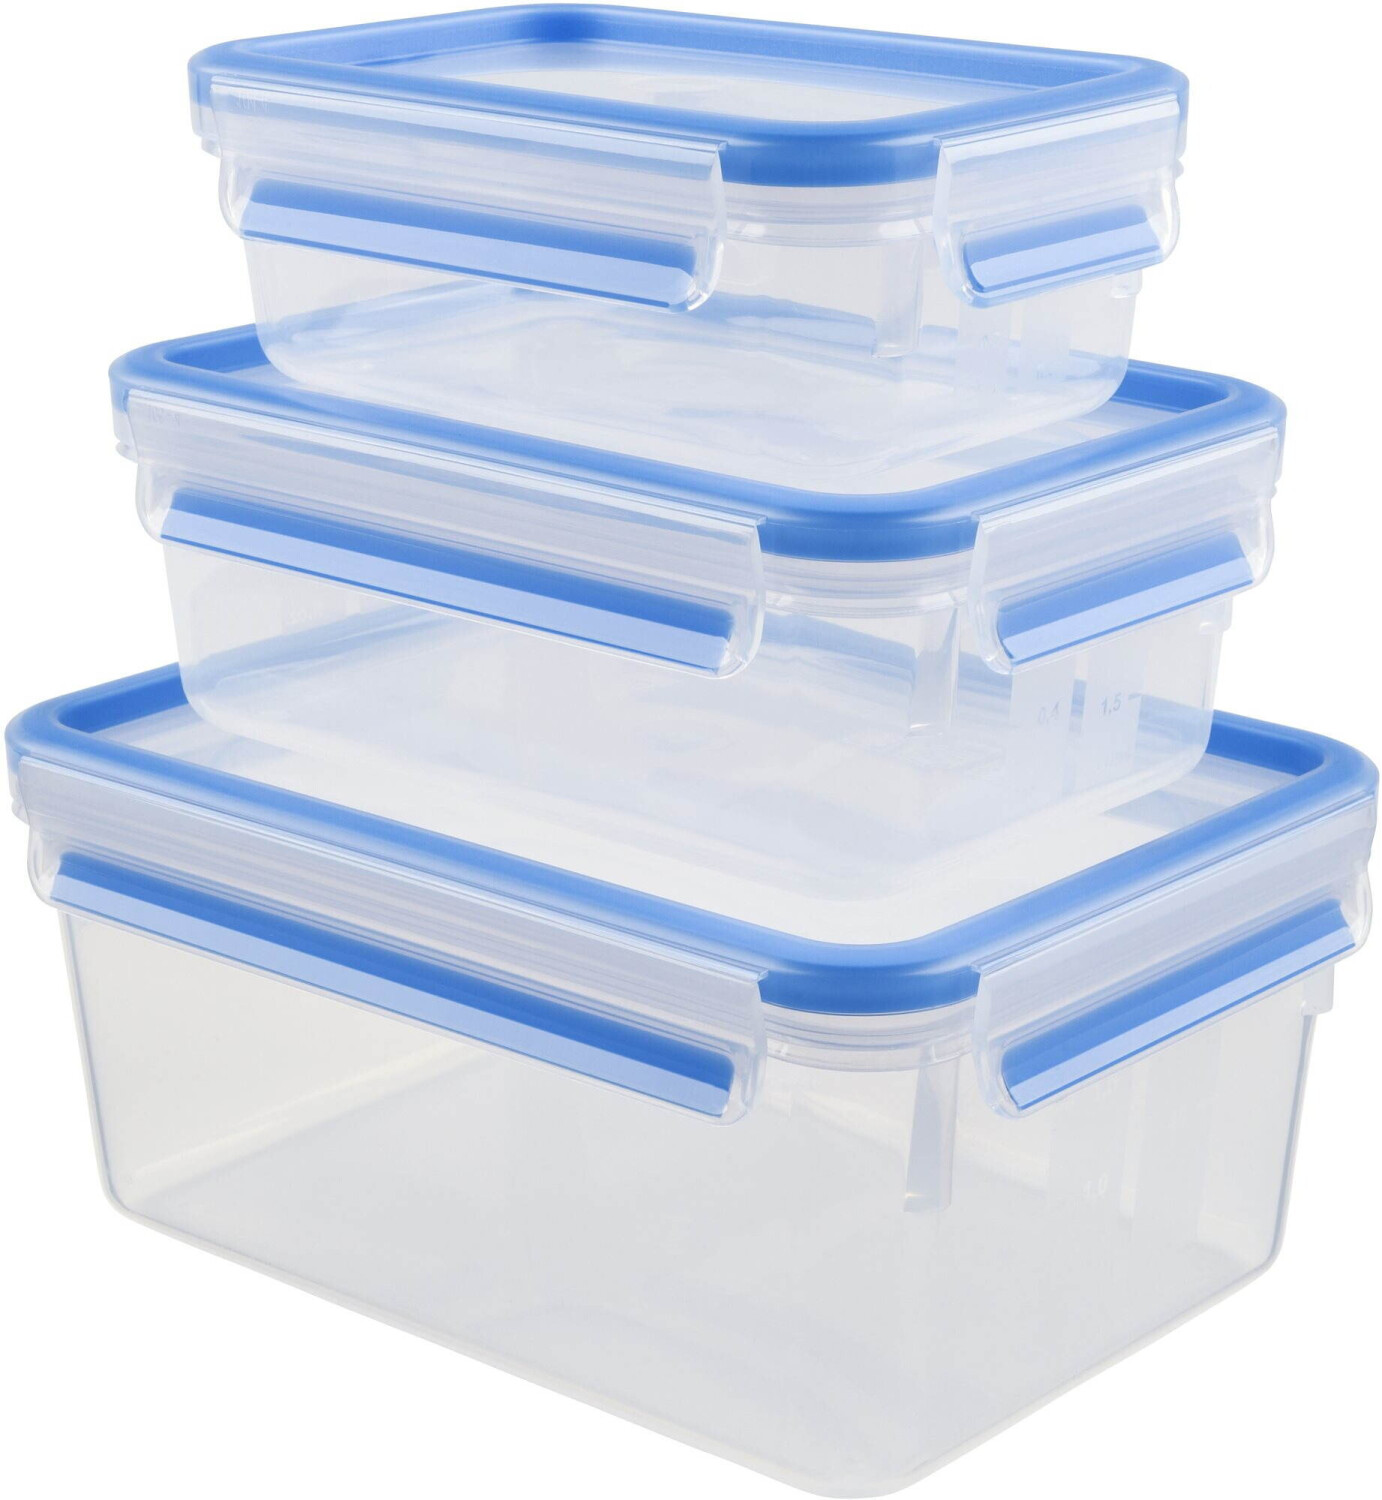 Food storage container MASTER SEAL FRESH K3029012, set of 5 pcs, Tefal 